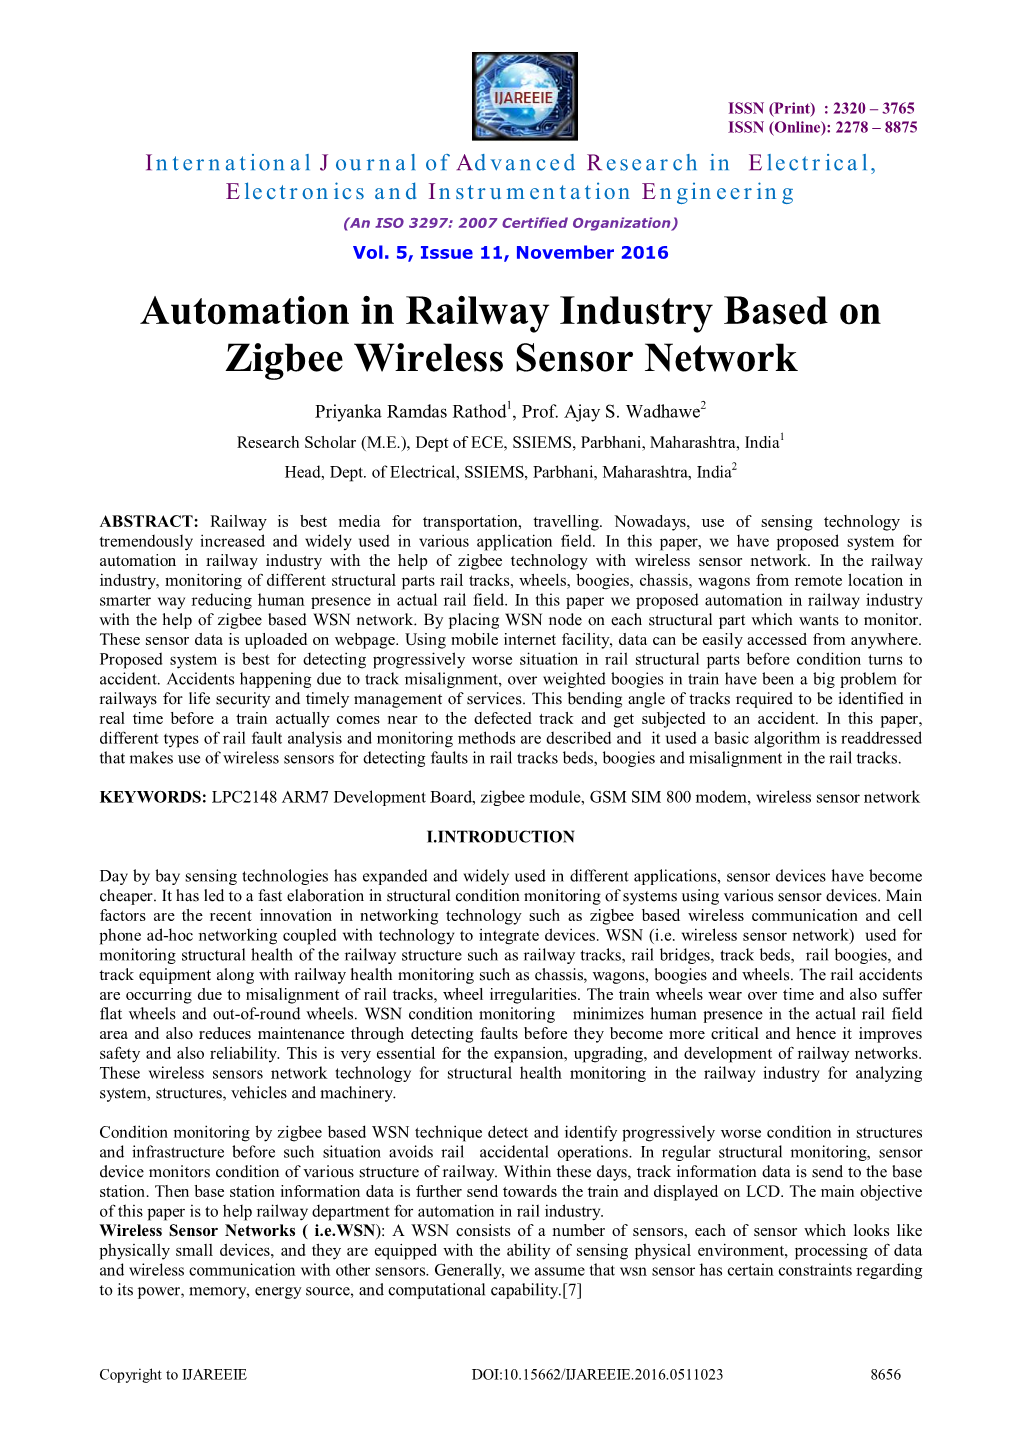 Automation in Railway Industry Based on Zigbee Wireless Sensor Network